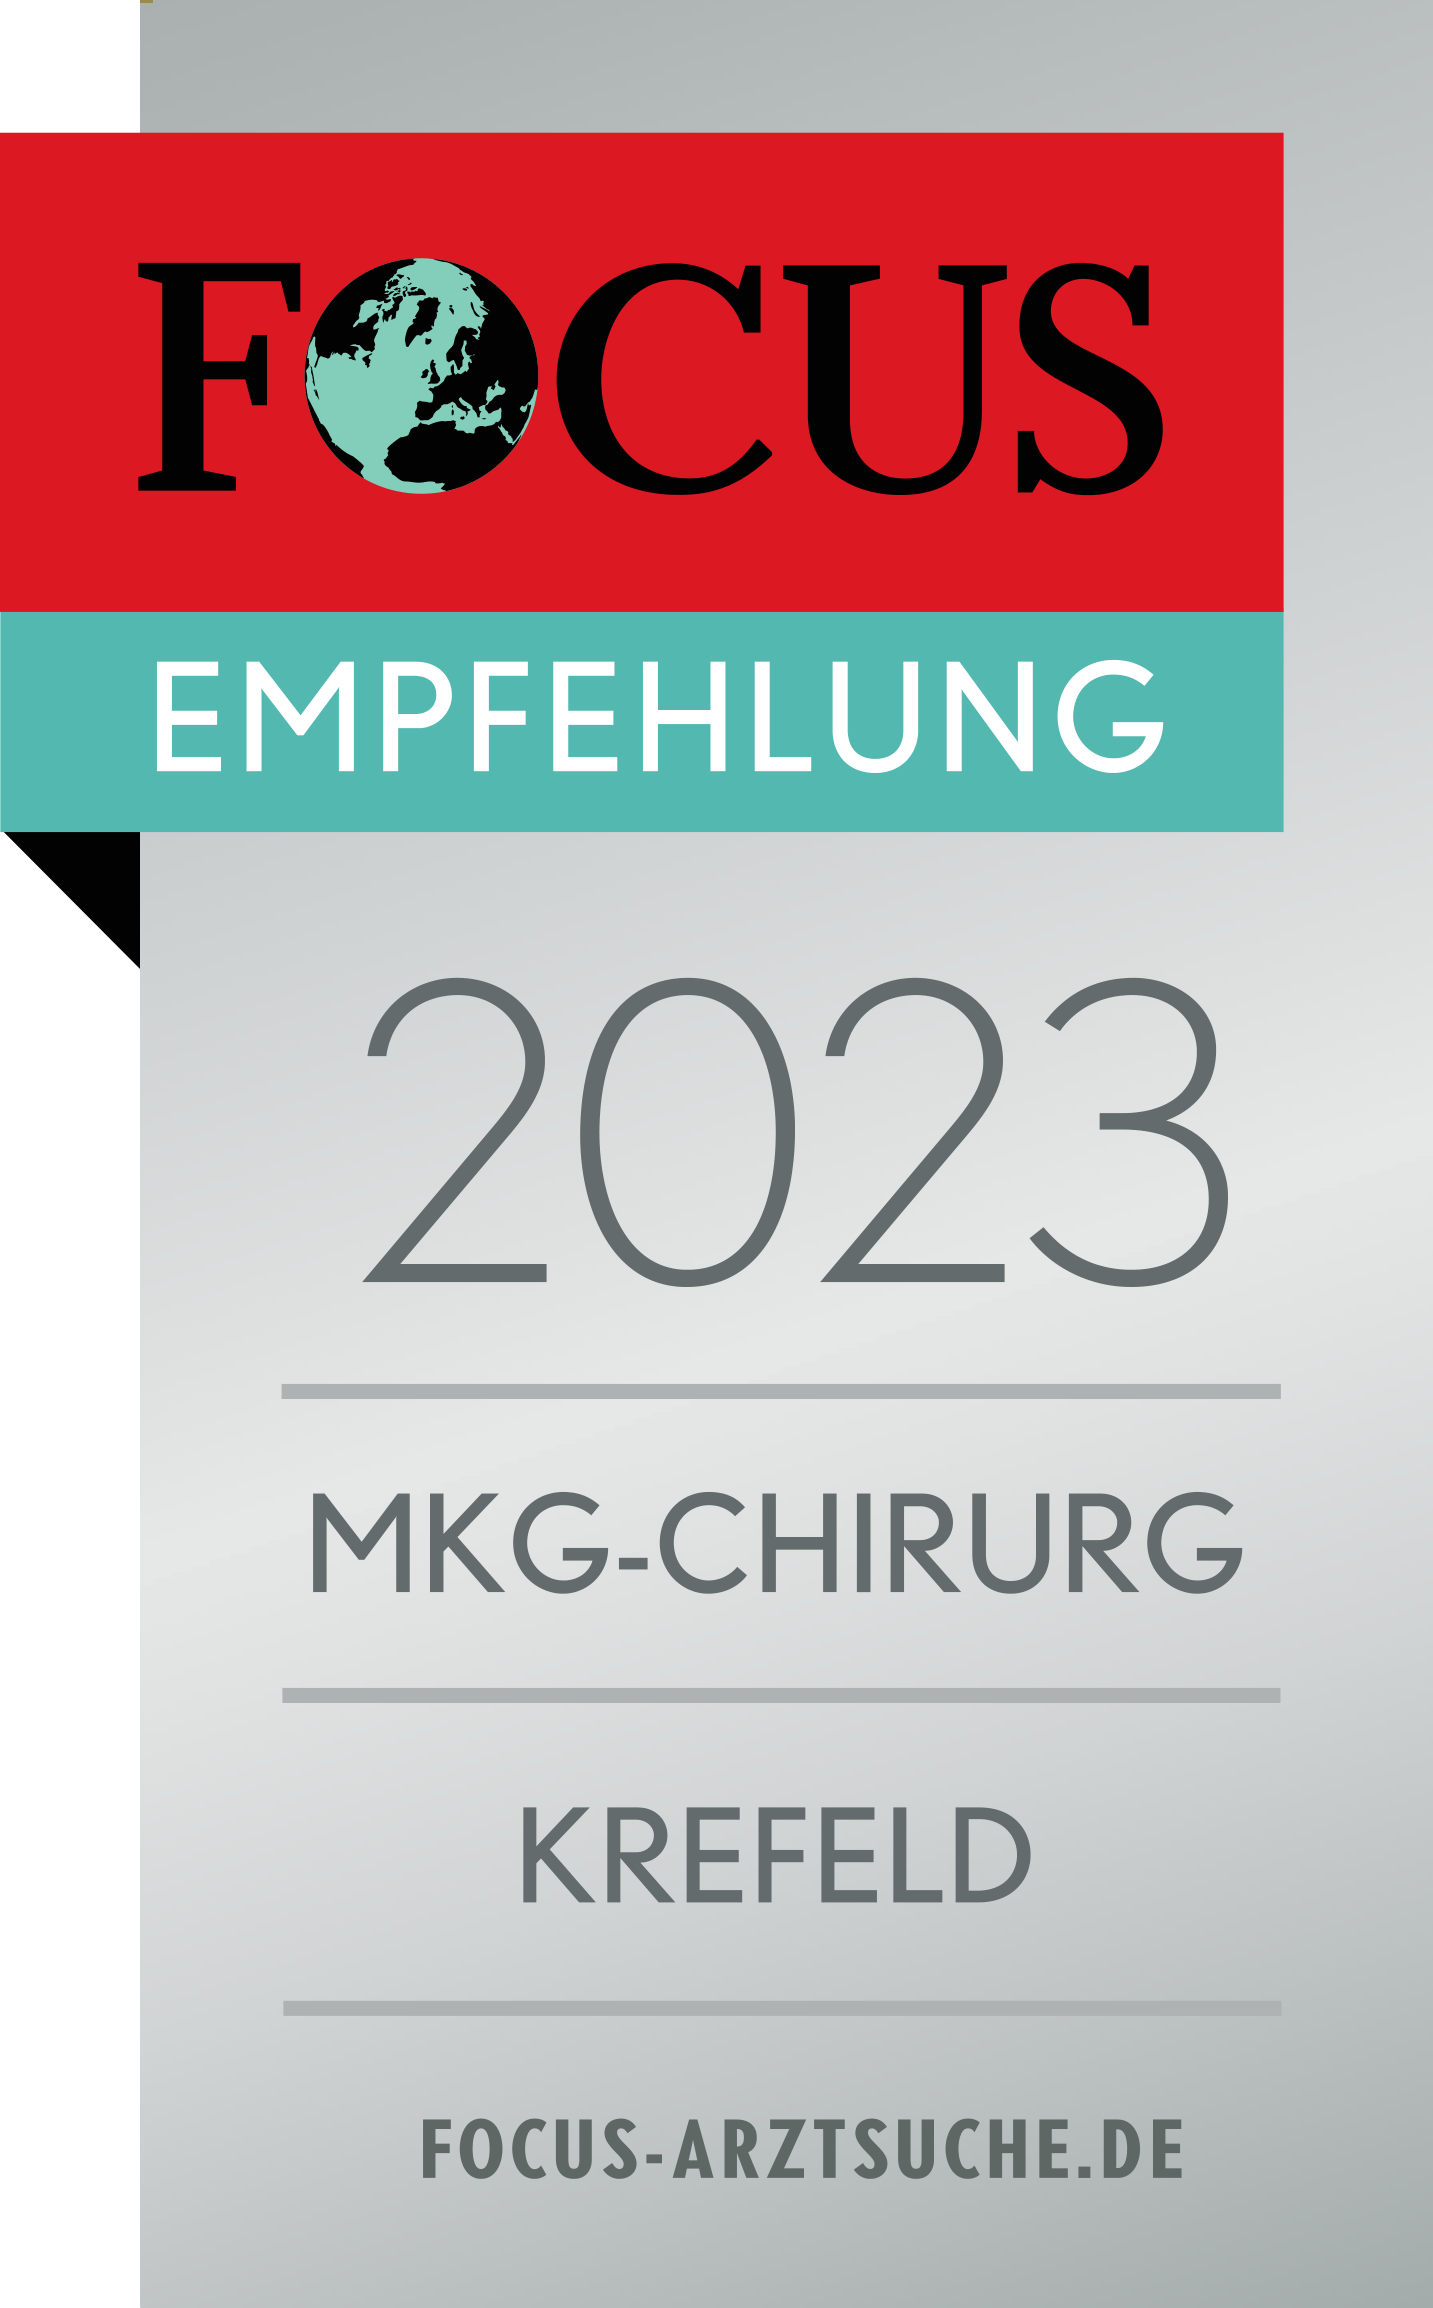 Focus Empfehlung 2023 MKG Krefeld